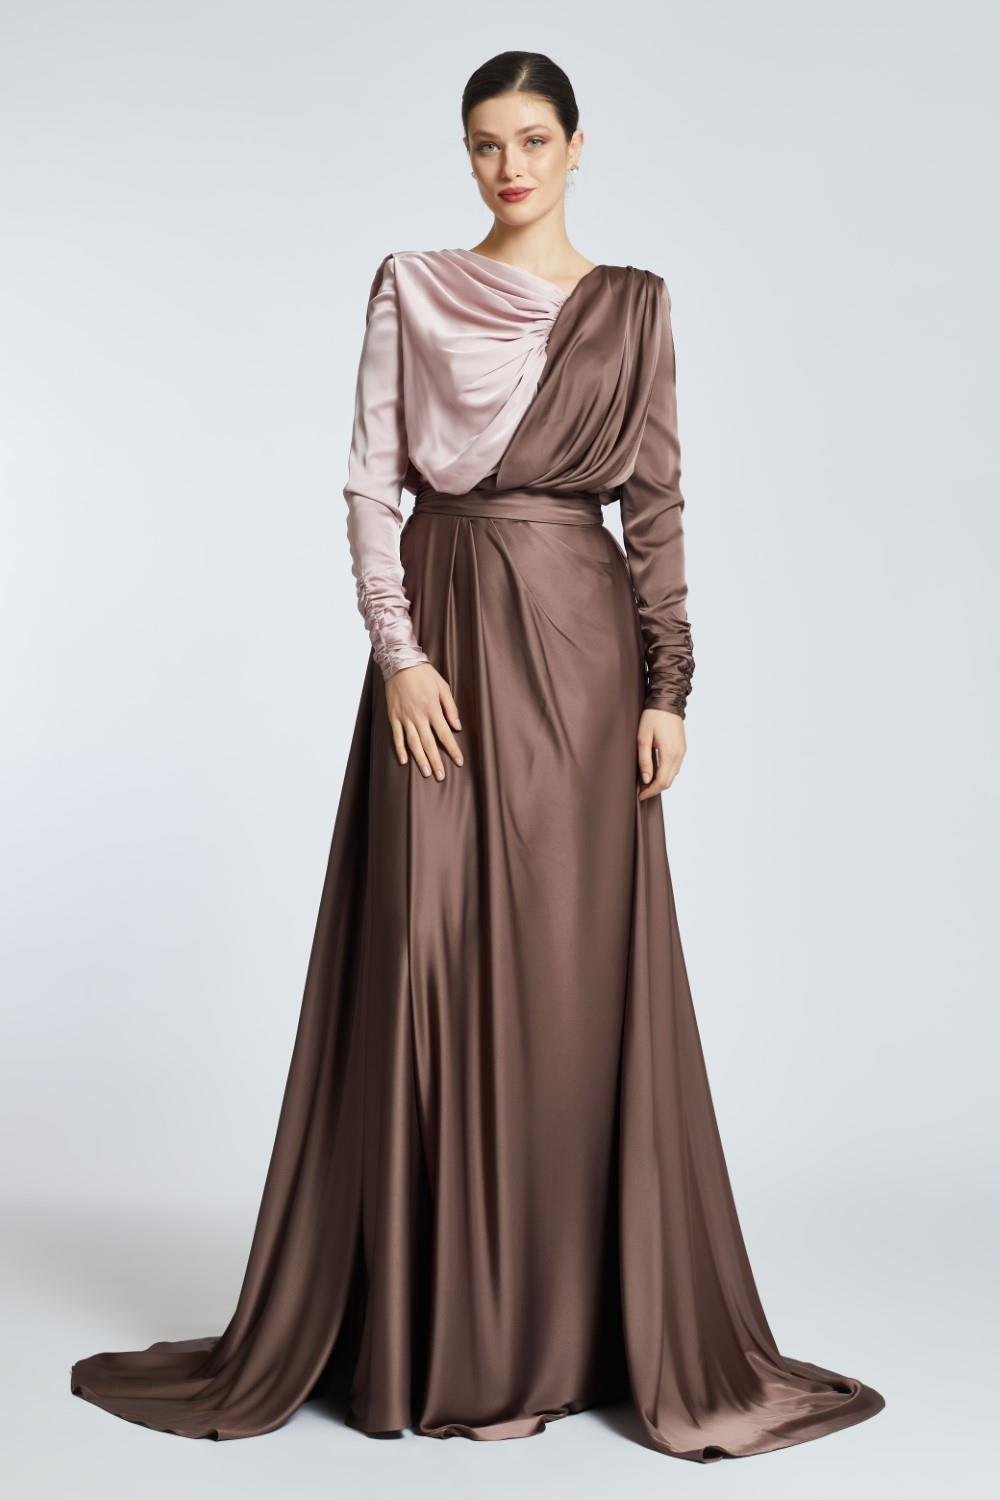 Genelia Deshmukh Hot Gown Designs | Trendy Gown Designs | Bridal Gowns